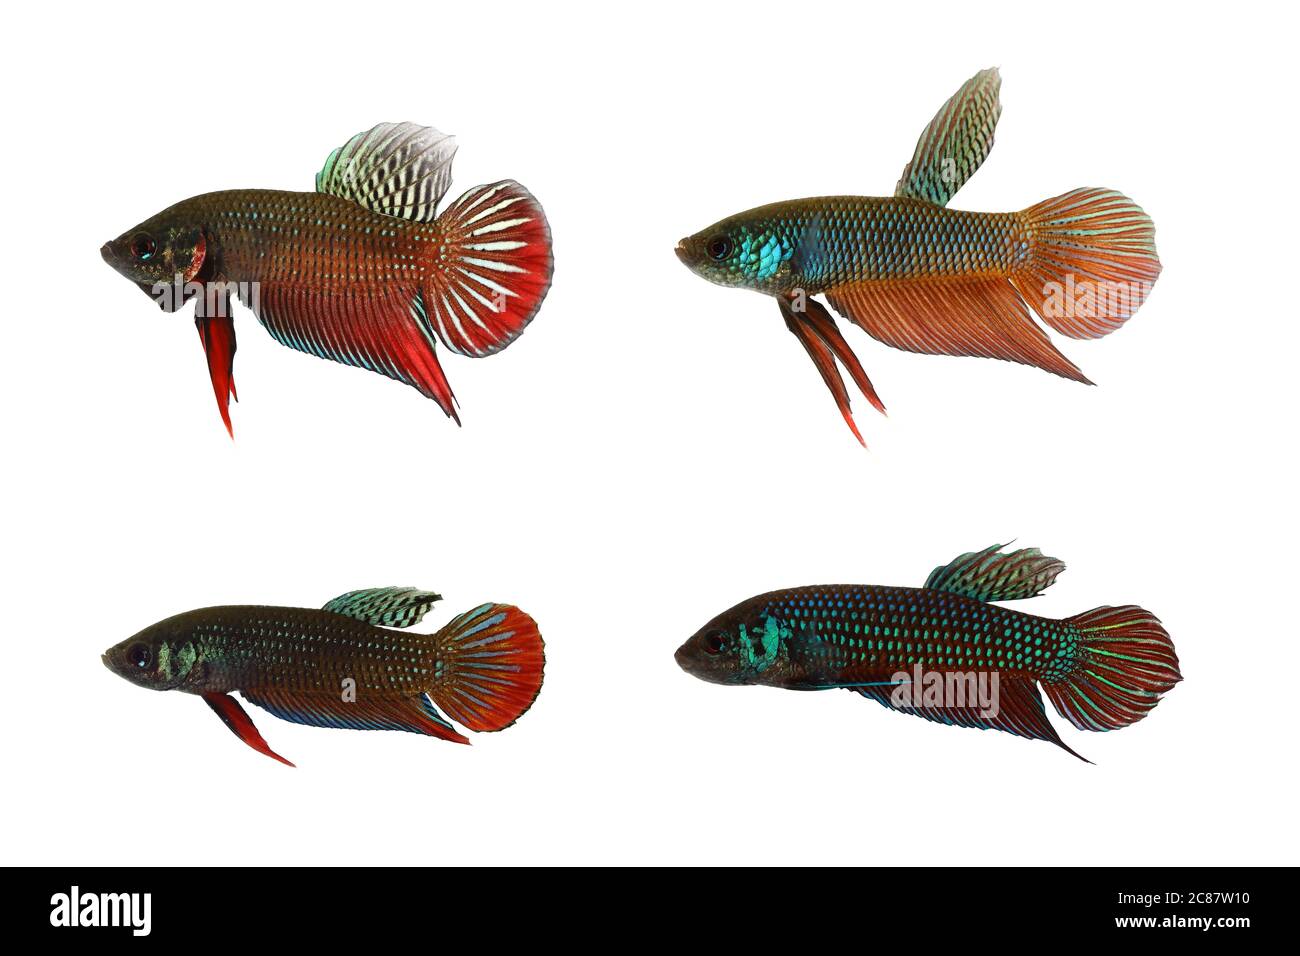 The 4 wild type Siamese fighting fish. Upper left: Betta splendens, Upper right: B. smaragdina, Lower left: B. imbellis, Lower right: B. mahachaiensis Stock Photo